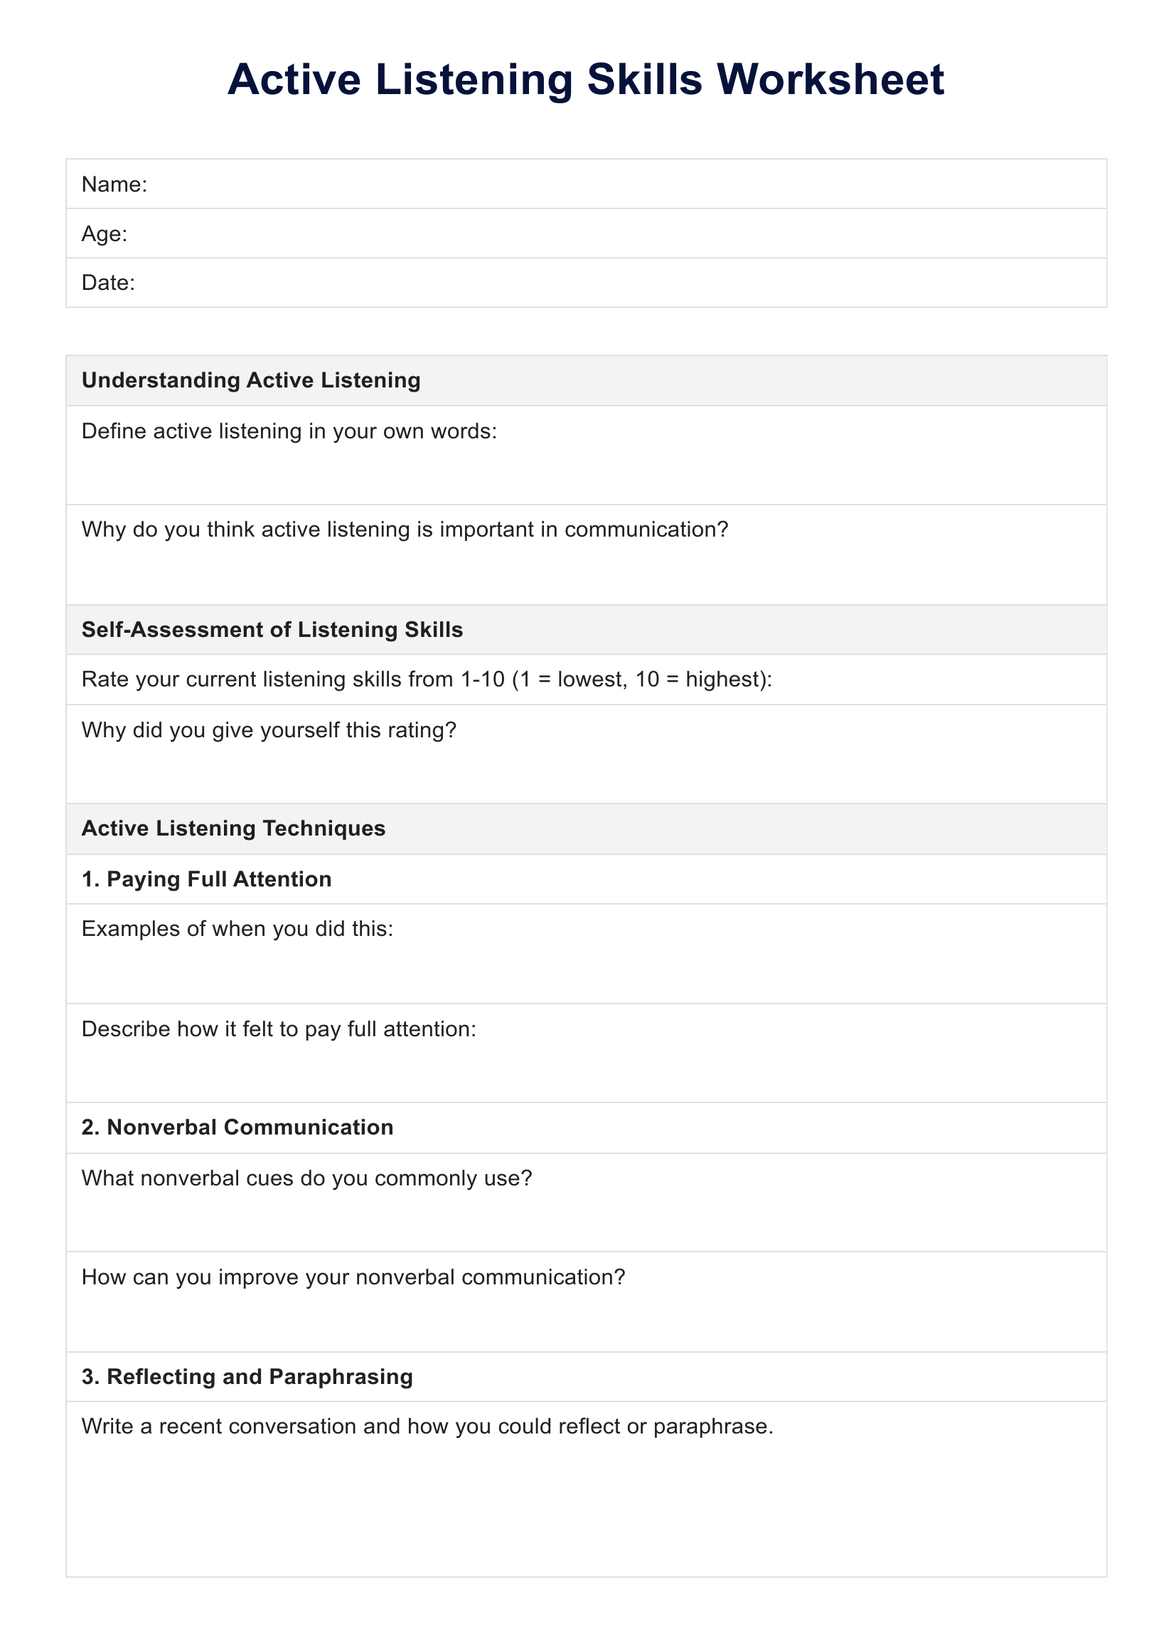 Active Listening Skills Worksheet PDF Example